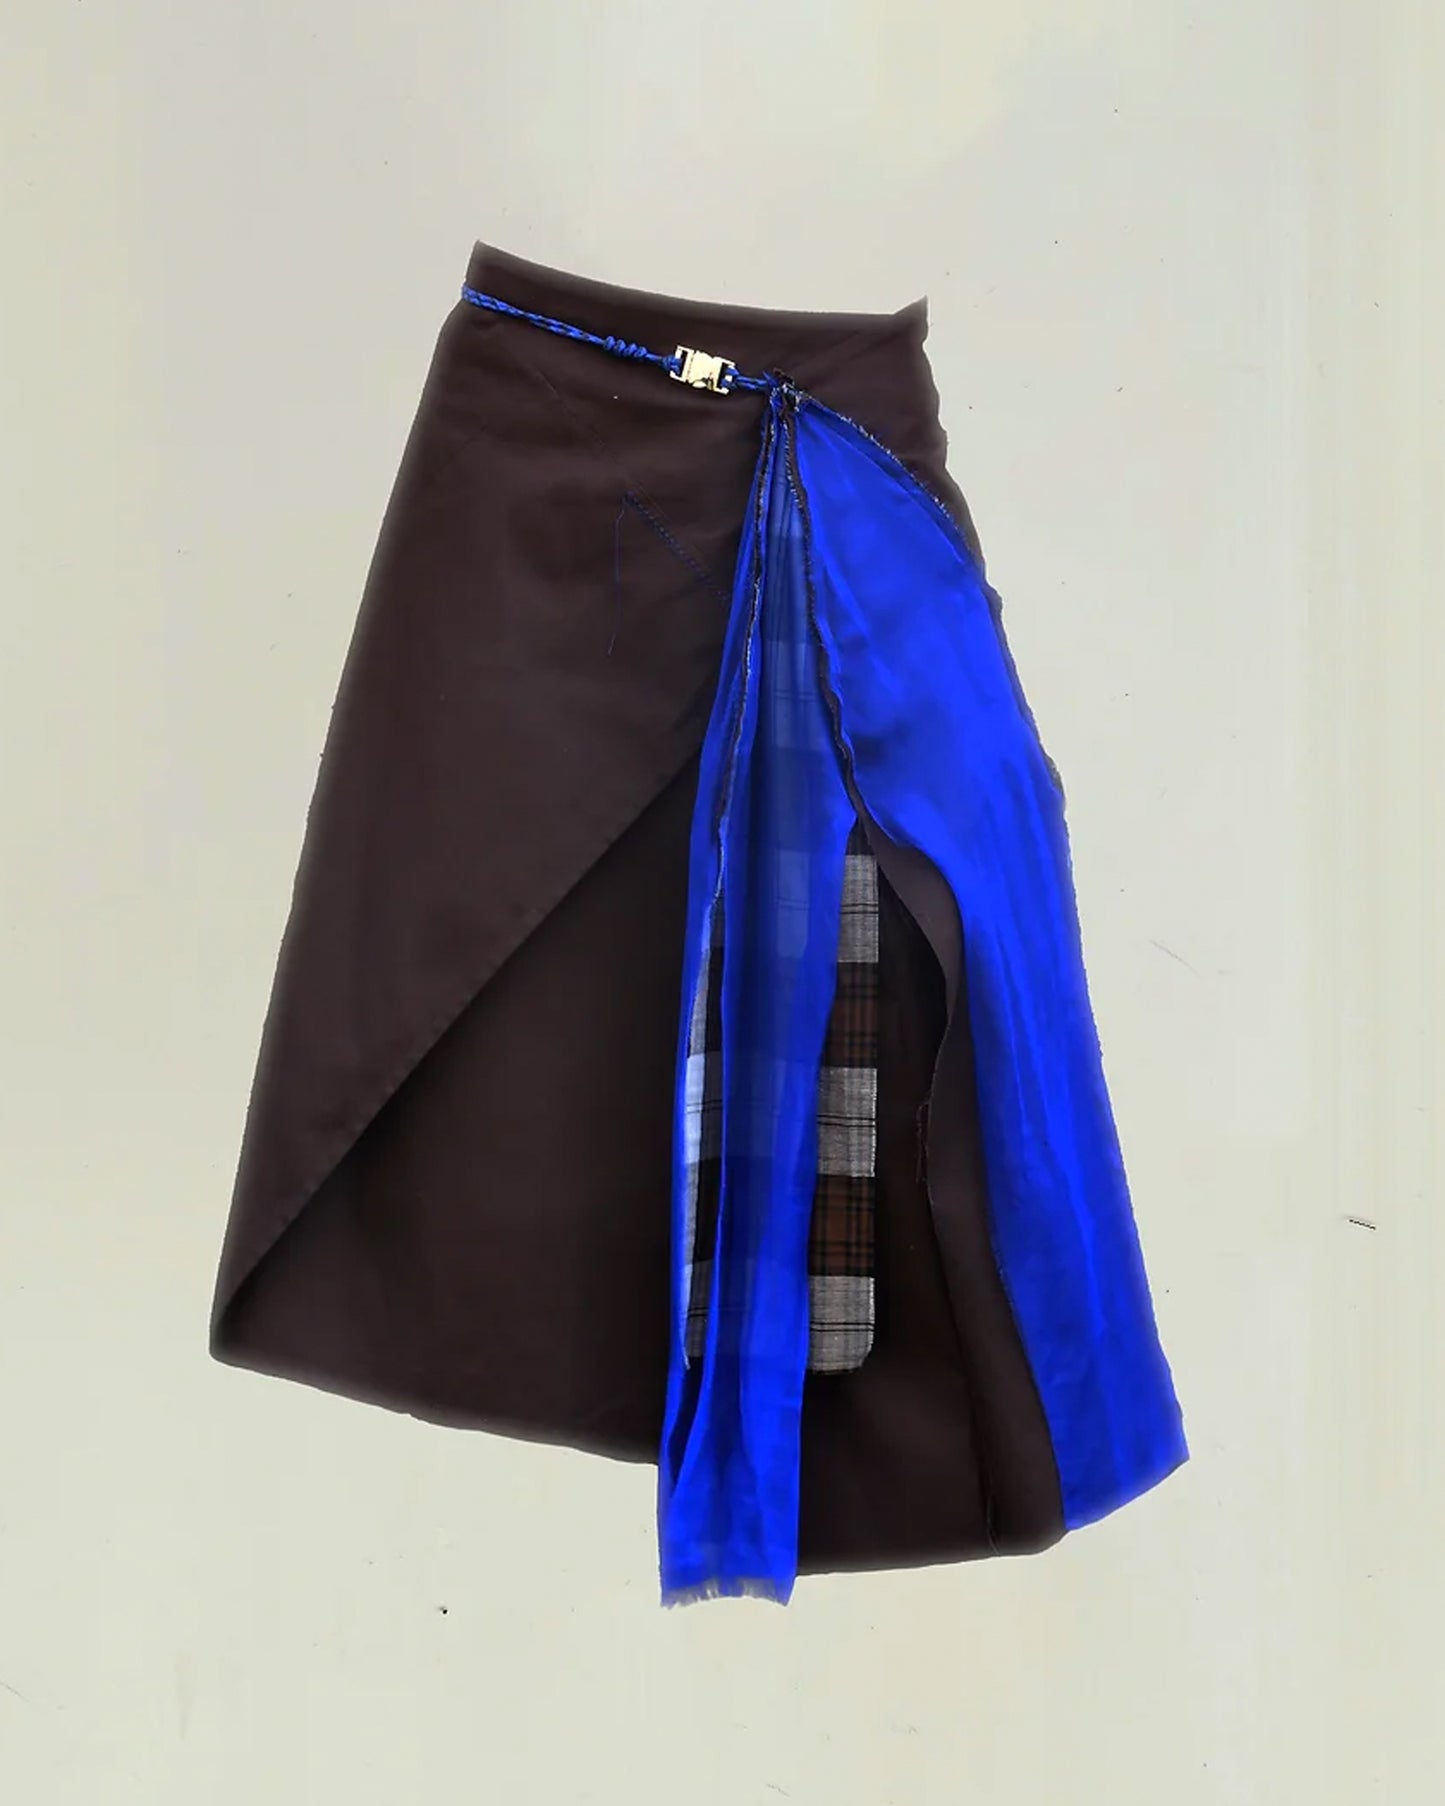 The Para Skirt